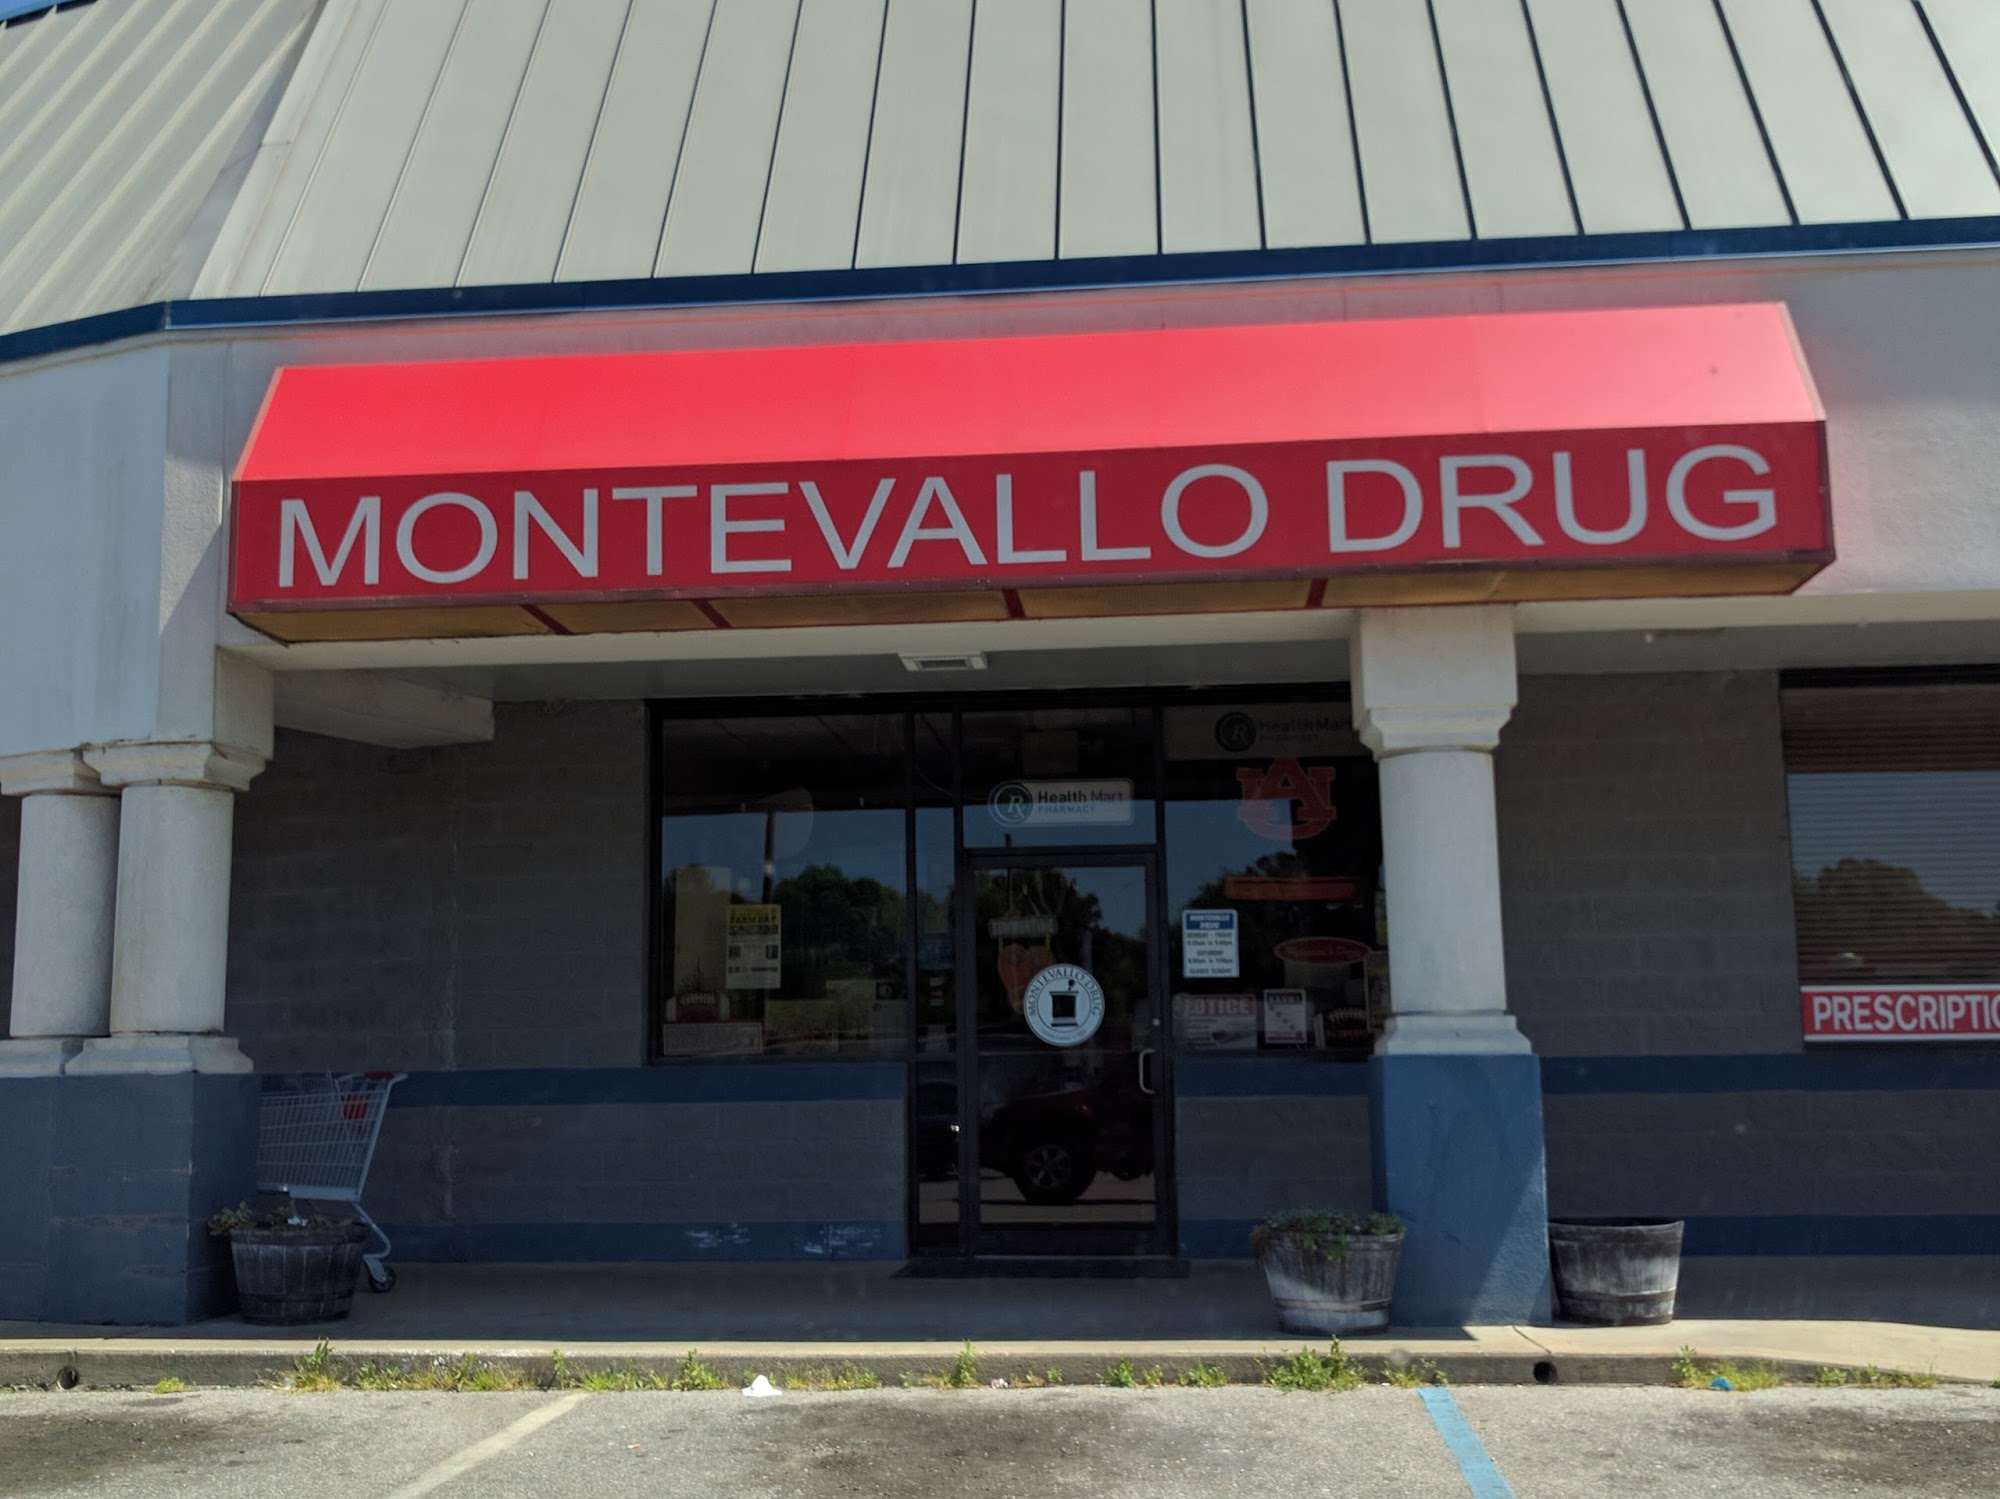 Montevallo Drug